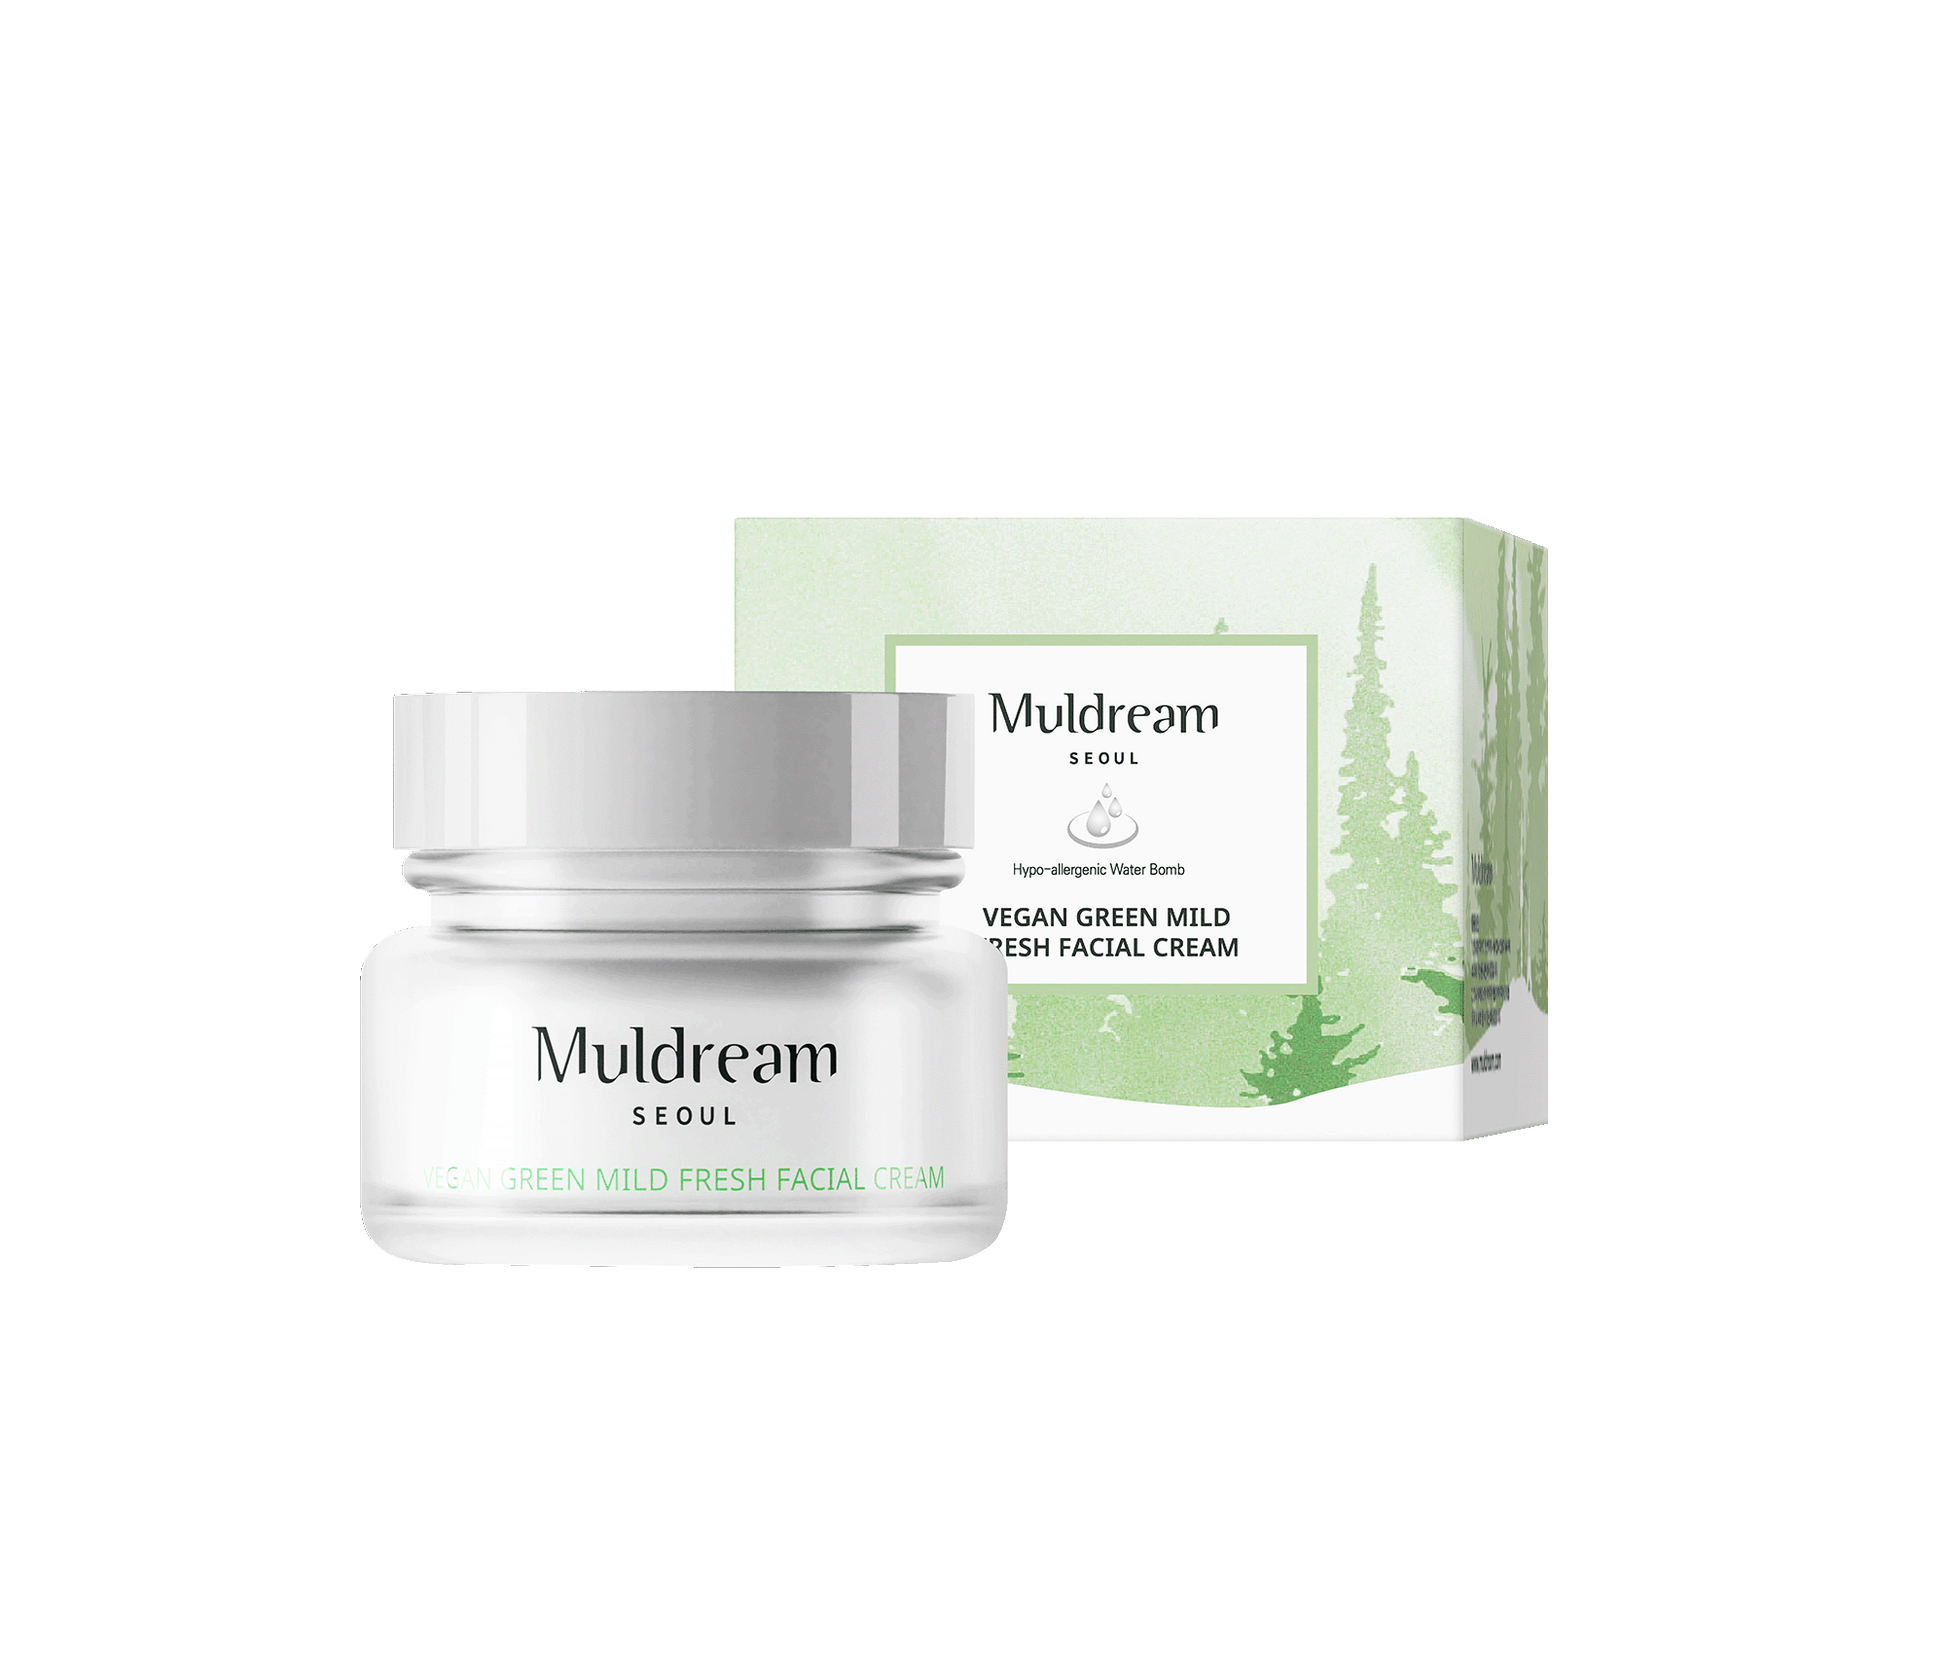 Muldream Vegan Green Mild Fresh Facial Cream